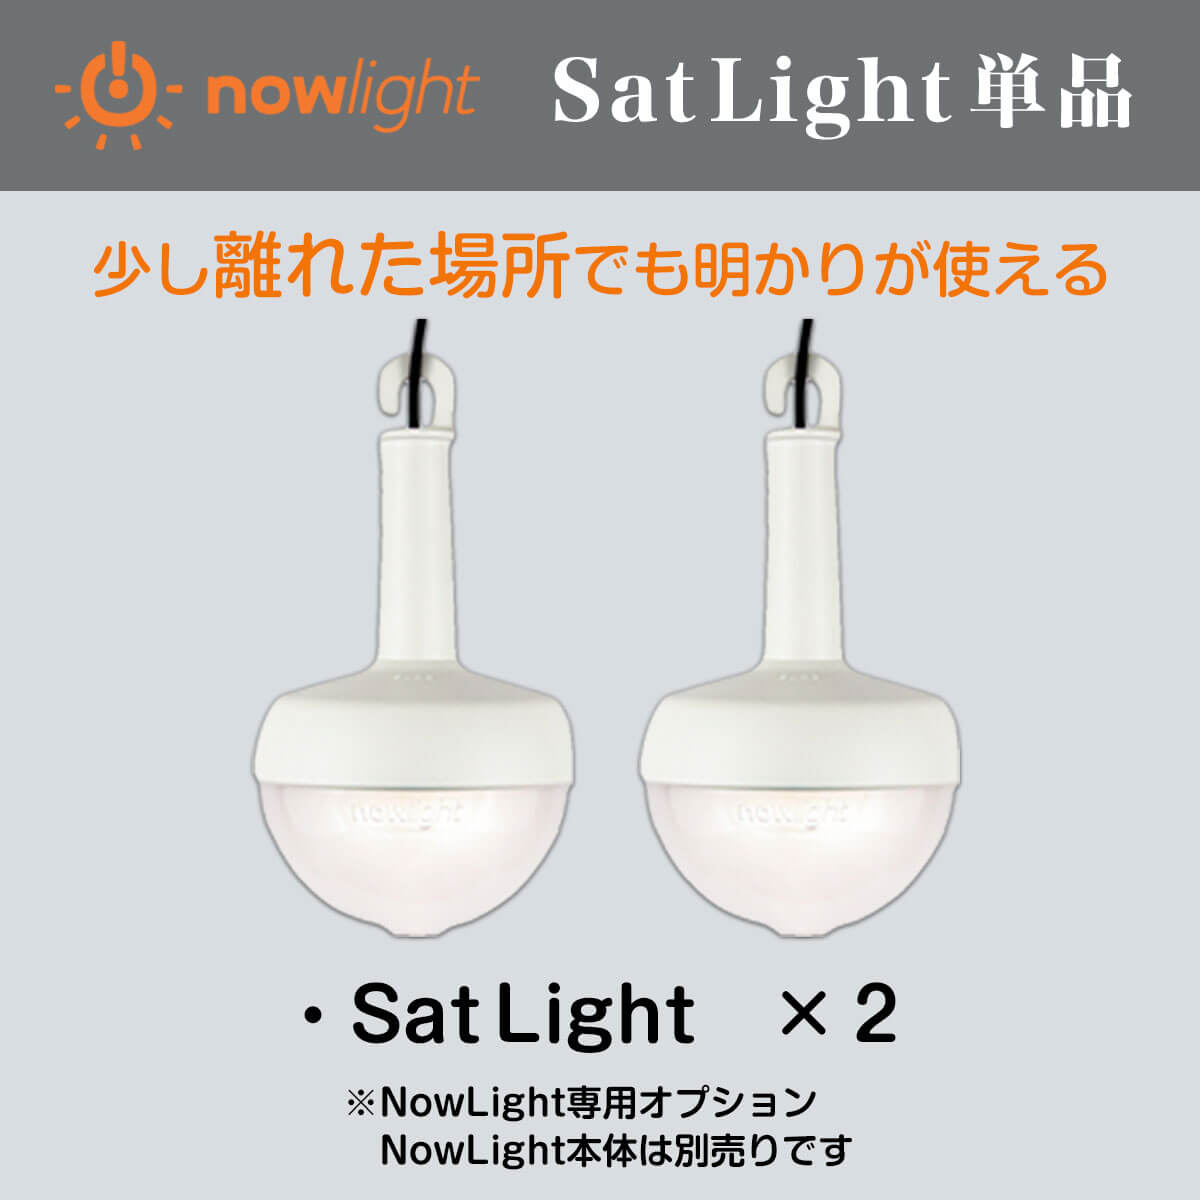 nowlight専用オプションSatLight